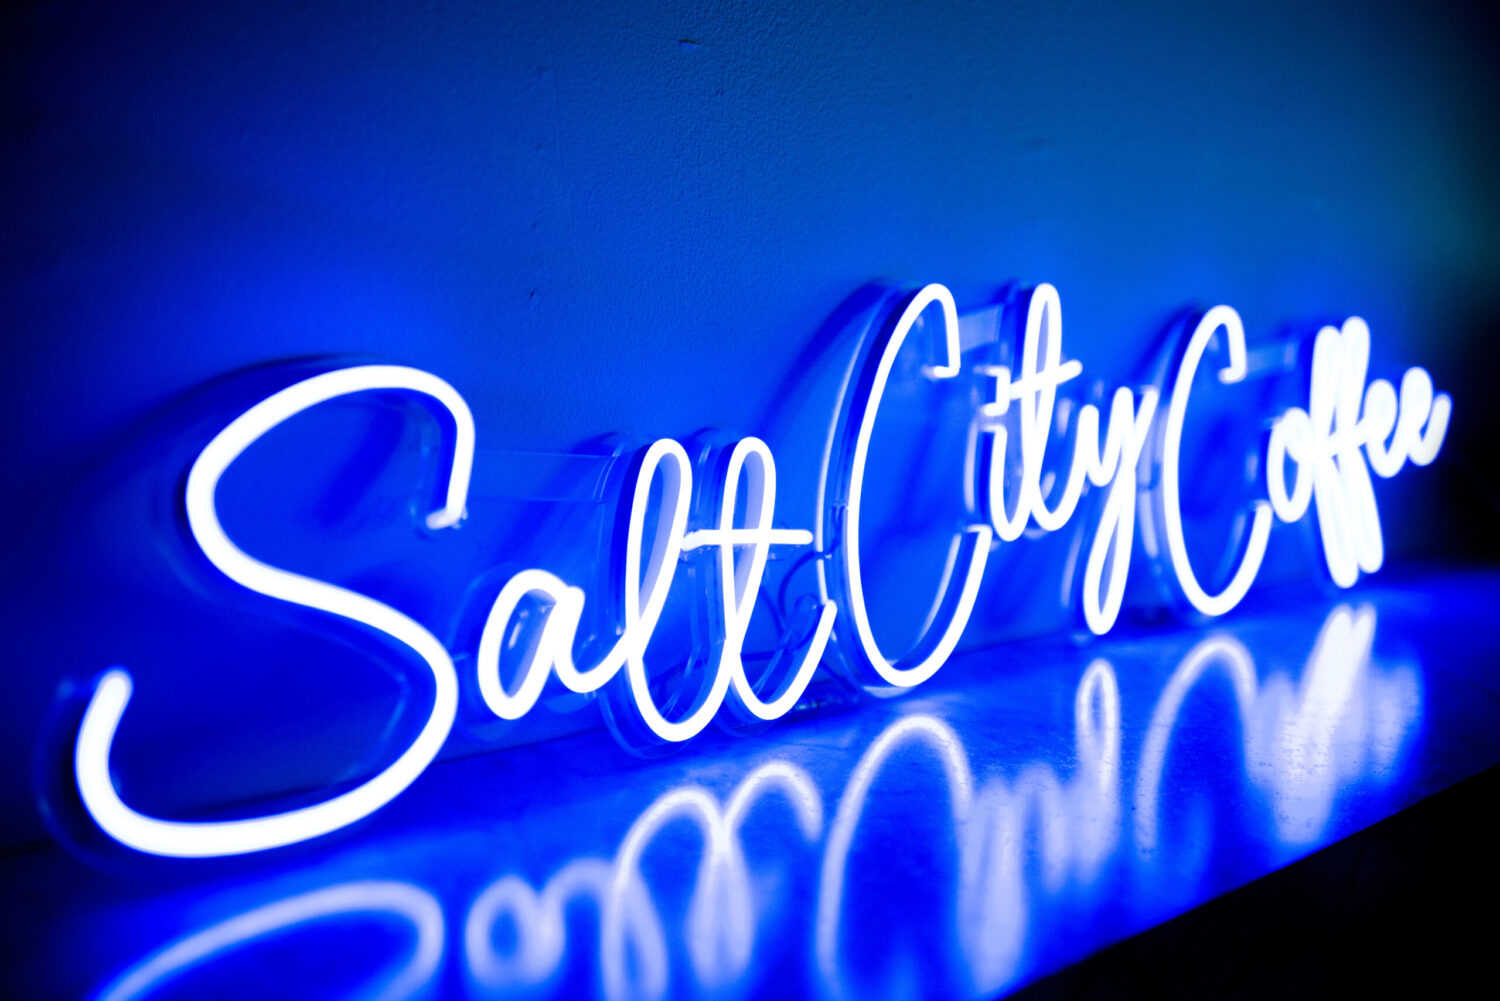 Welcome to Salt City Coffee!